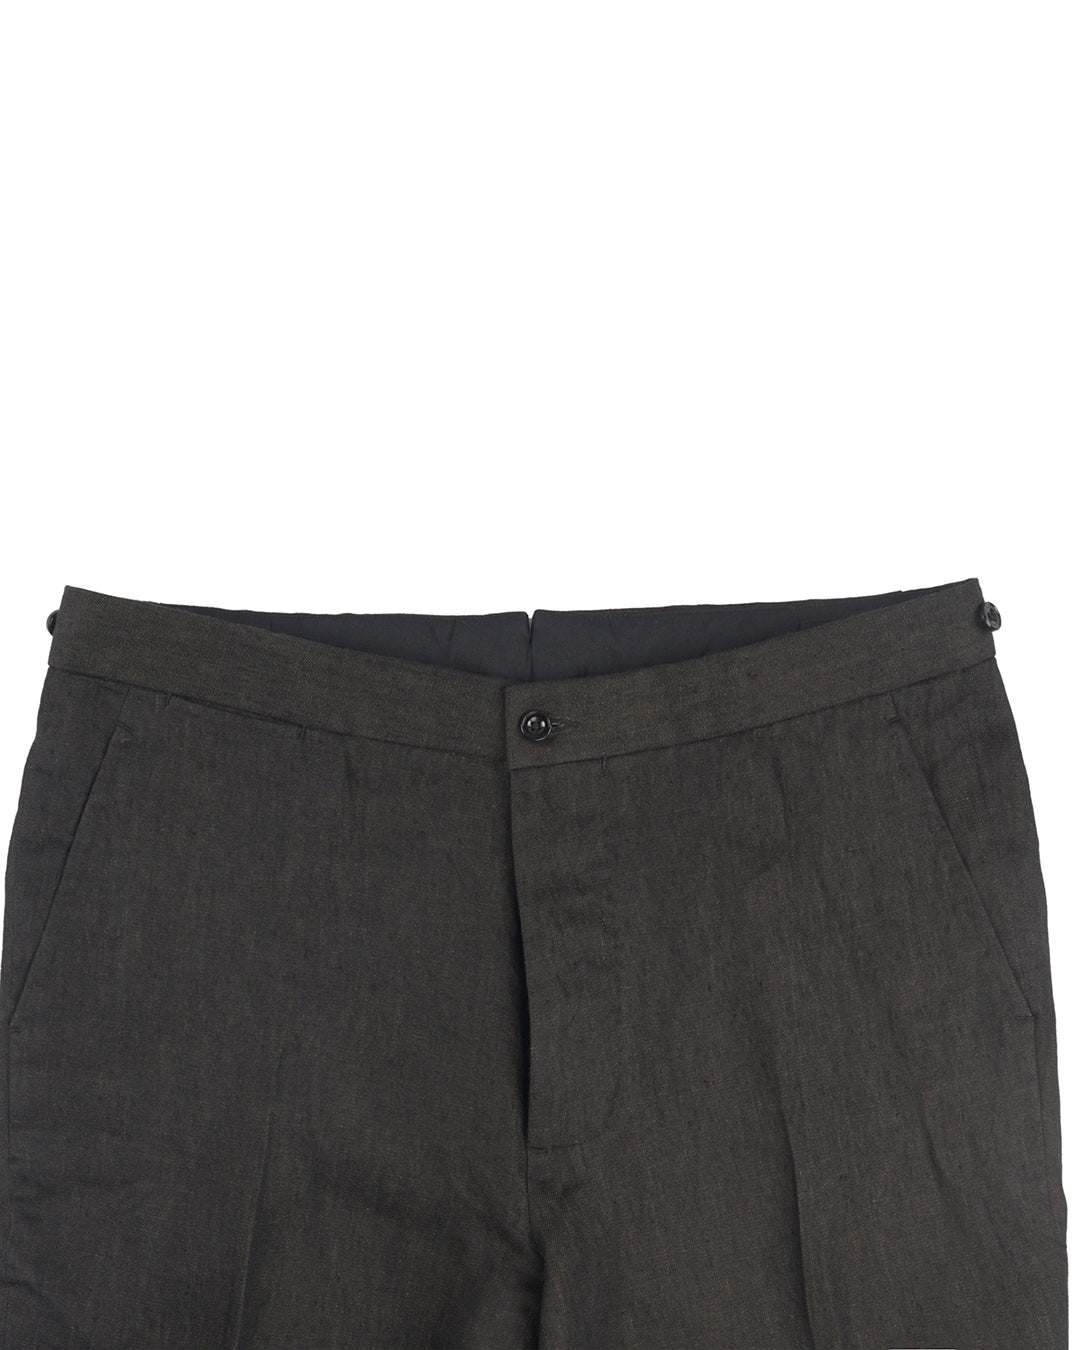 Front view of custom linen pants for men by Luxire in dark brown